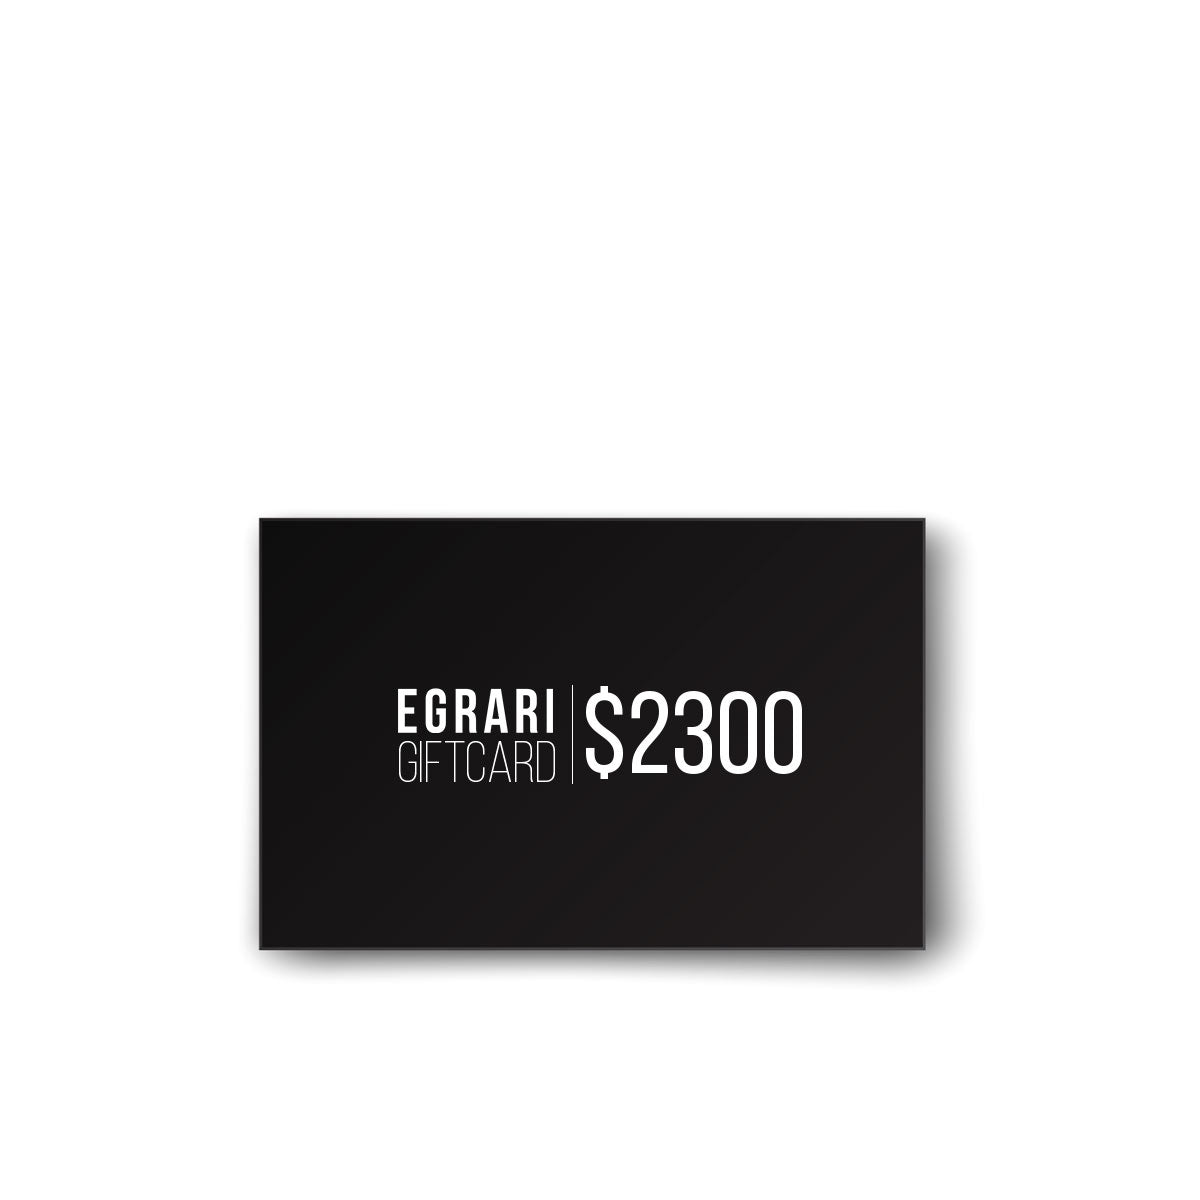 Egrari Night of Beauty gift card save $300